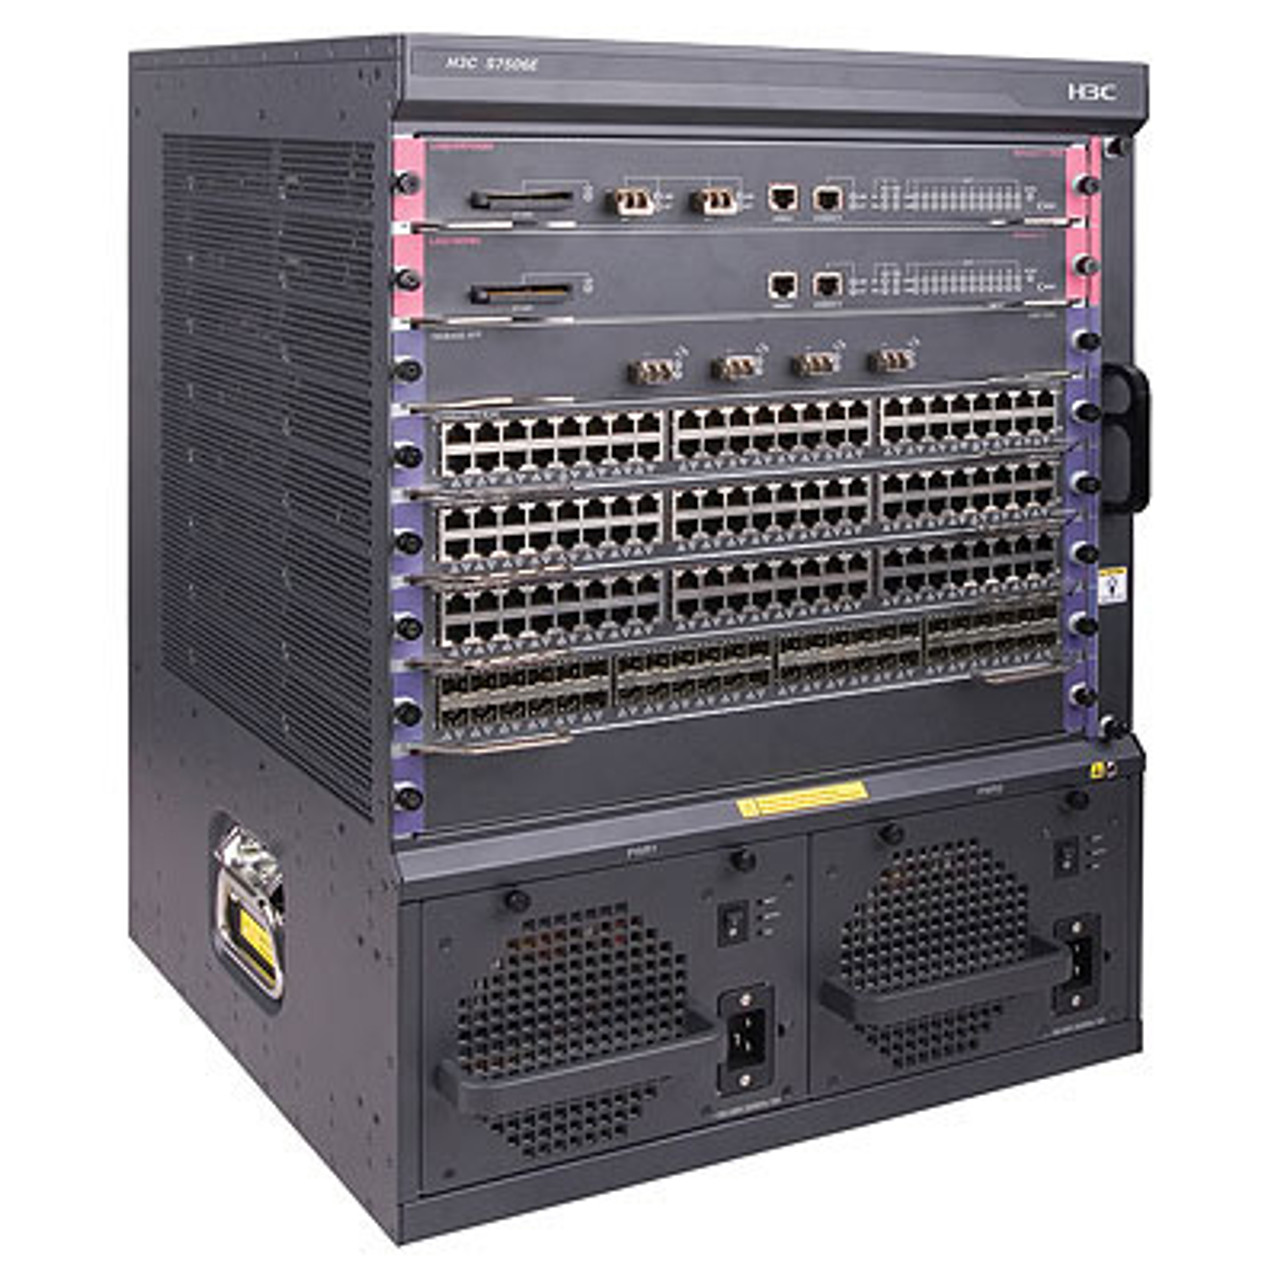 HP 7506 Switch L4-L7 Managed Rack-mountable 13U